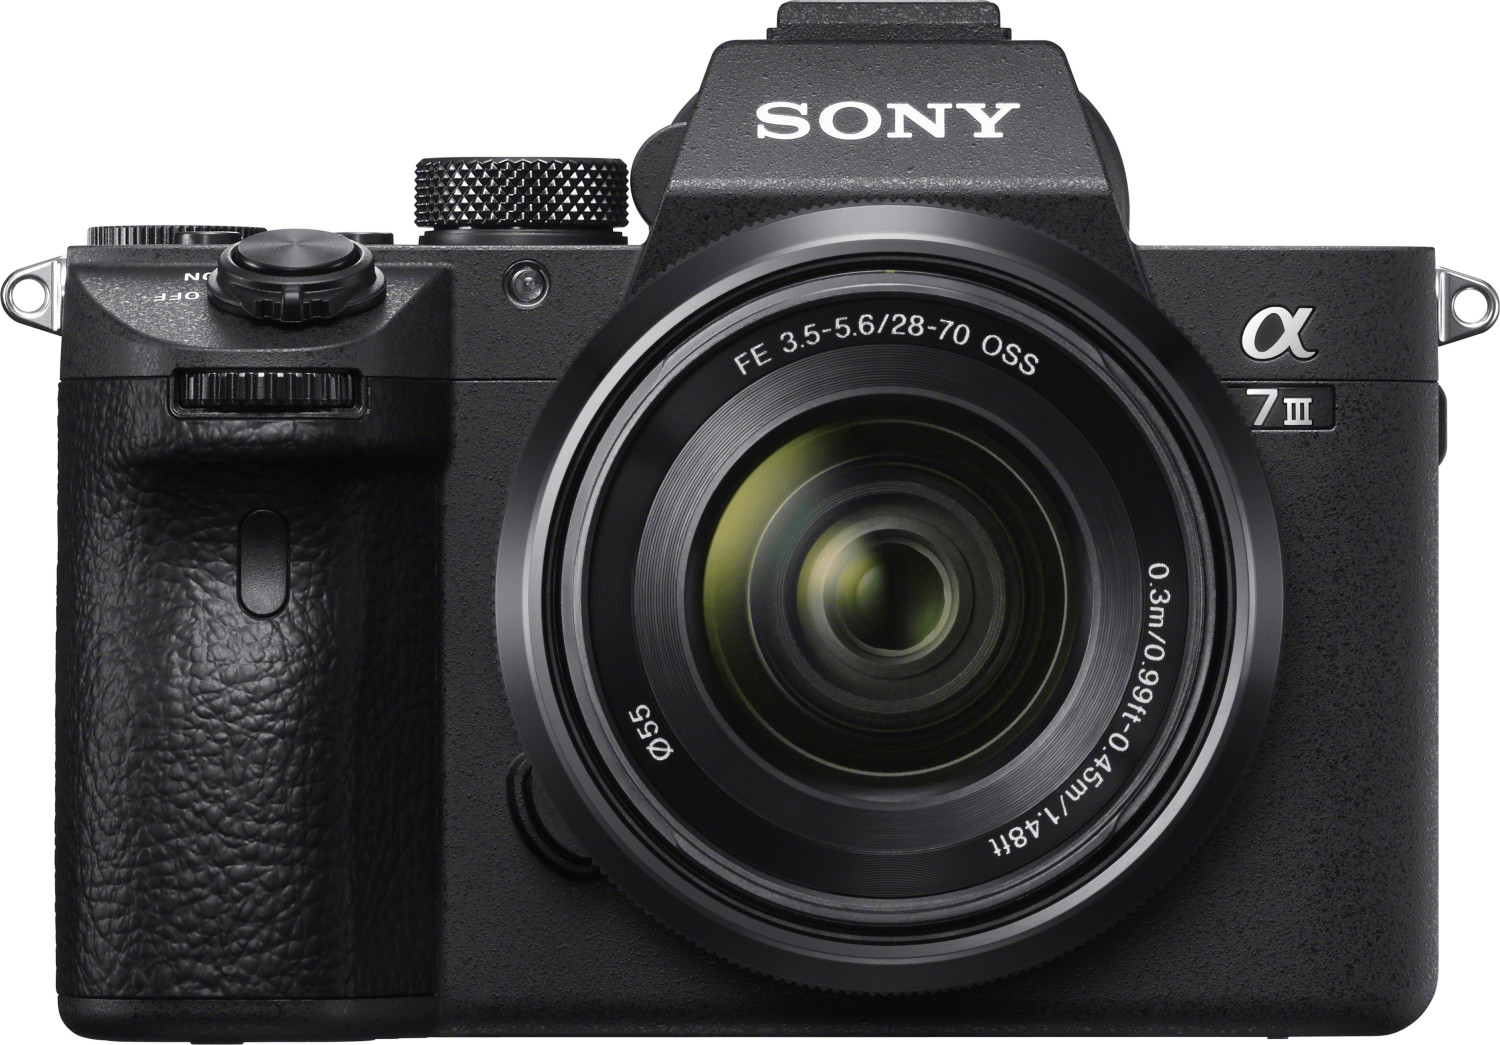 Image of Fotocamera mirrorless Sony Ilce 7M3 obbiettivo 28-70 3.5-5.6 OSS